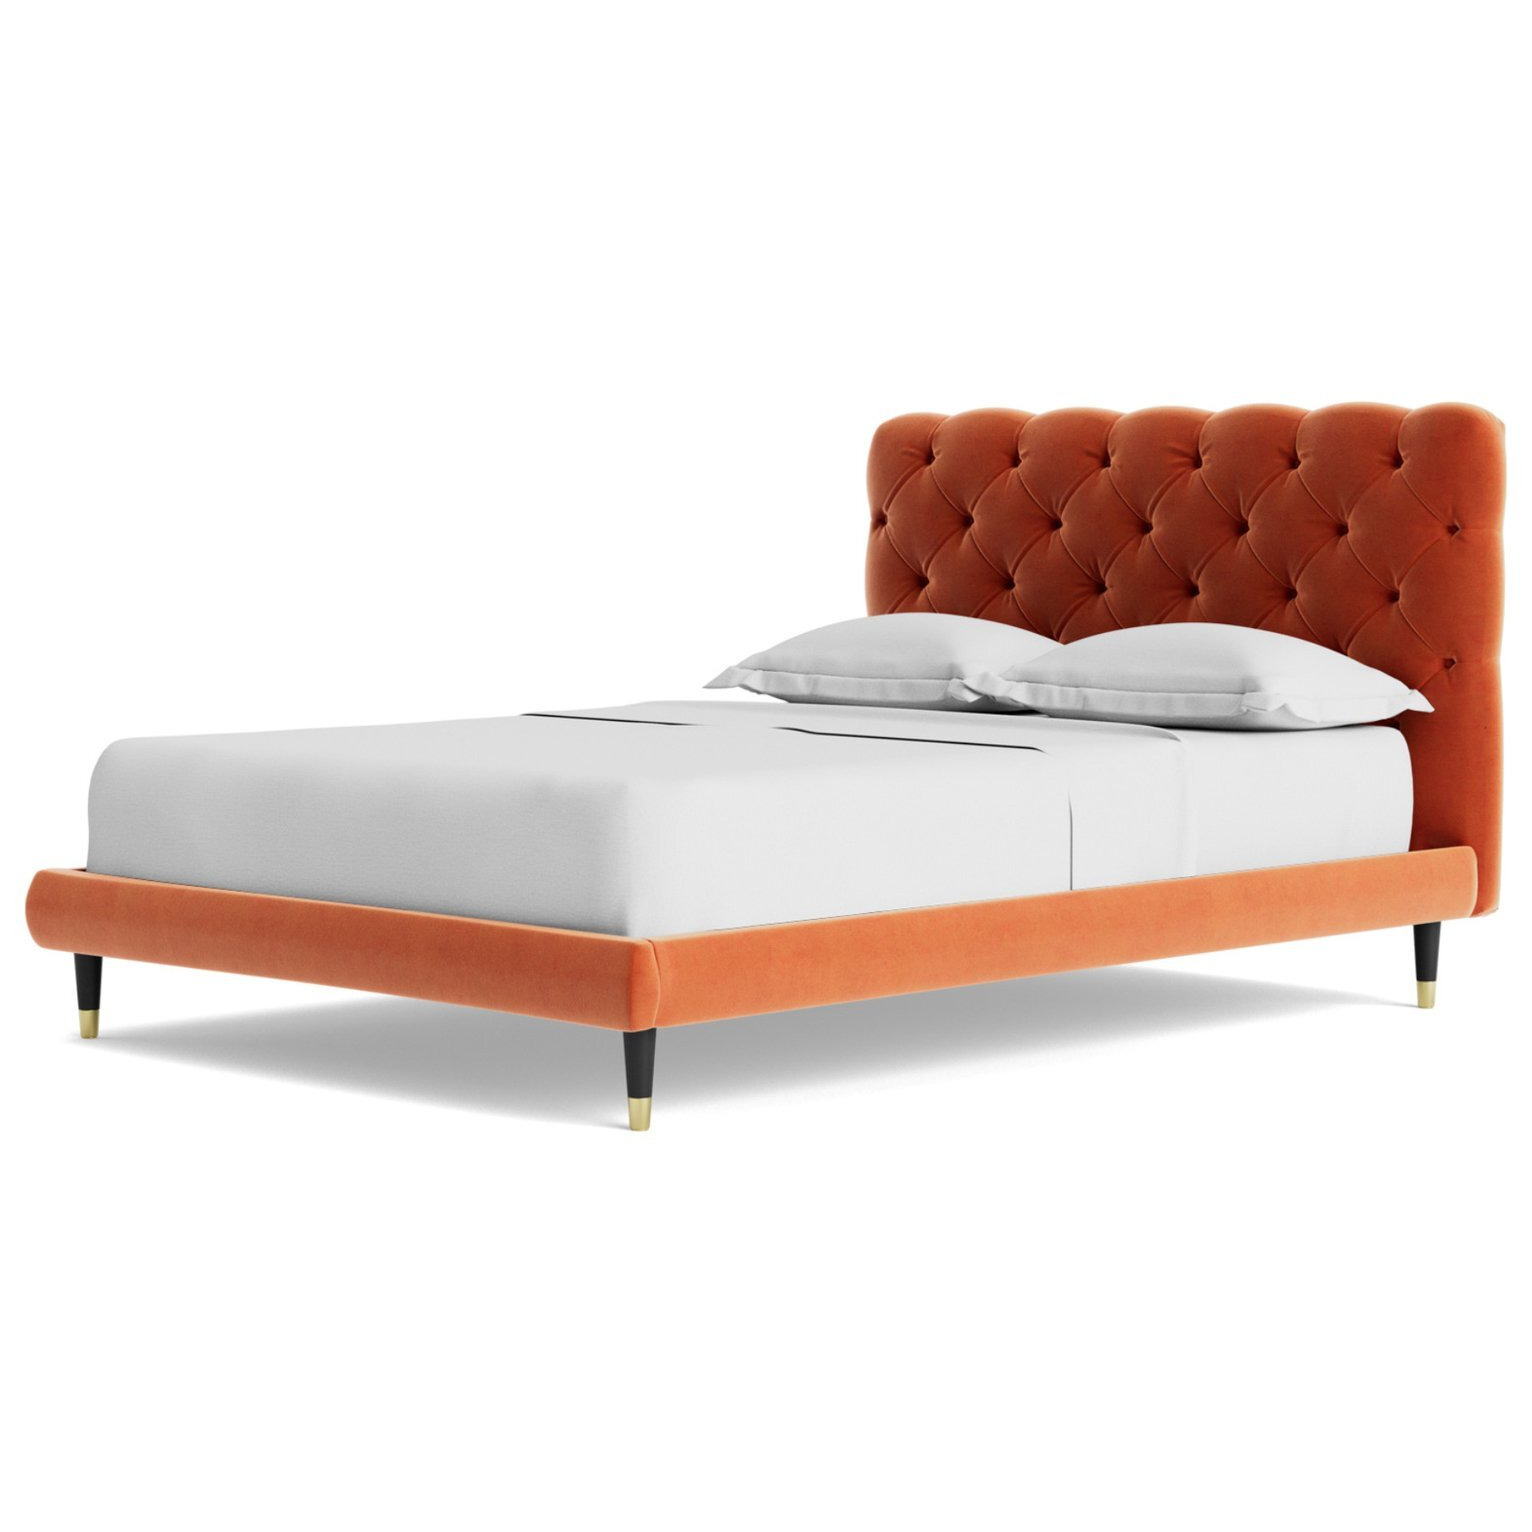 Swoon Burbage Kingsize Velvet Bed Frame - Burnt Orange - image 1